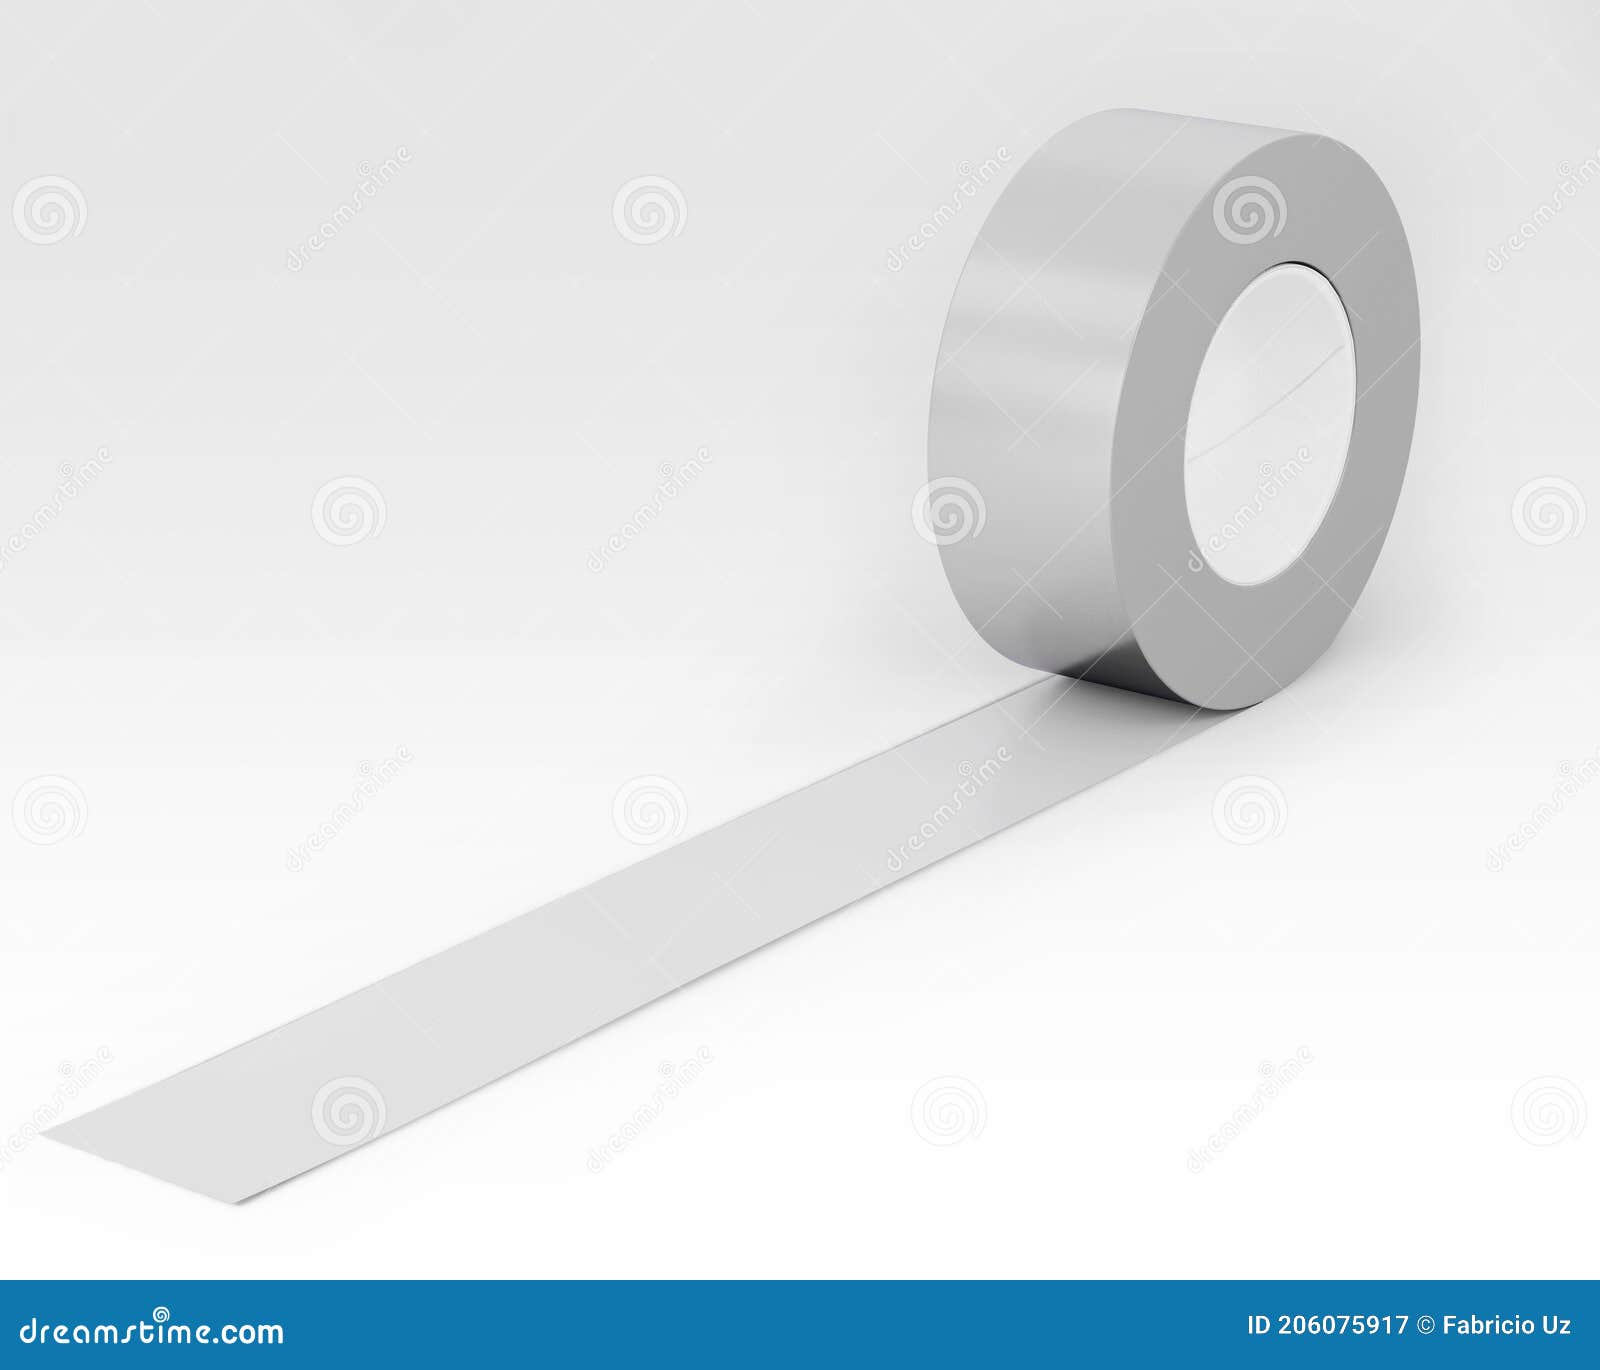 Download 3d Illustration Duct Tape Mockup Isolated On White Background Stock Illustration Illustration Of Paper Label 206075917